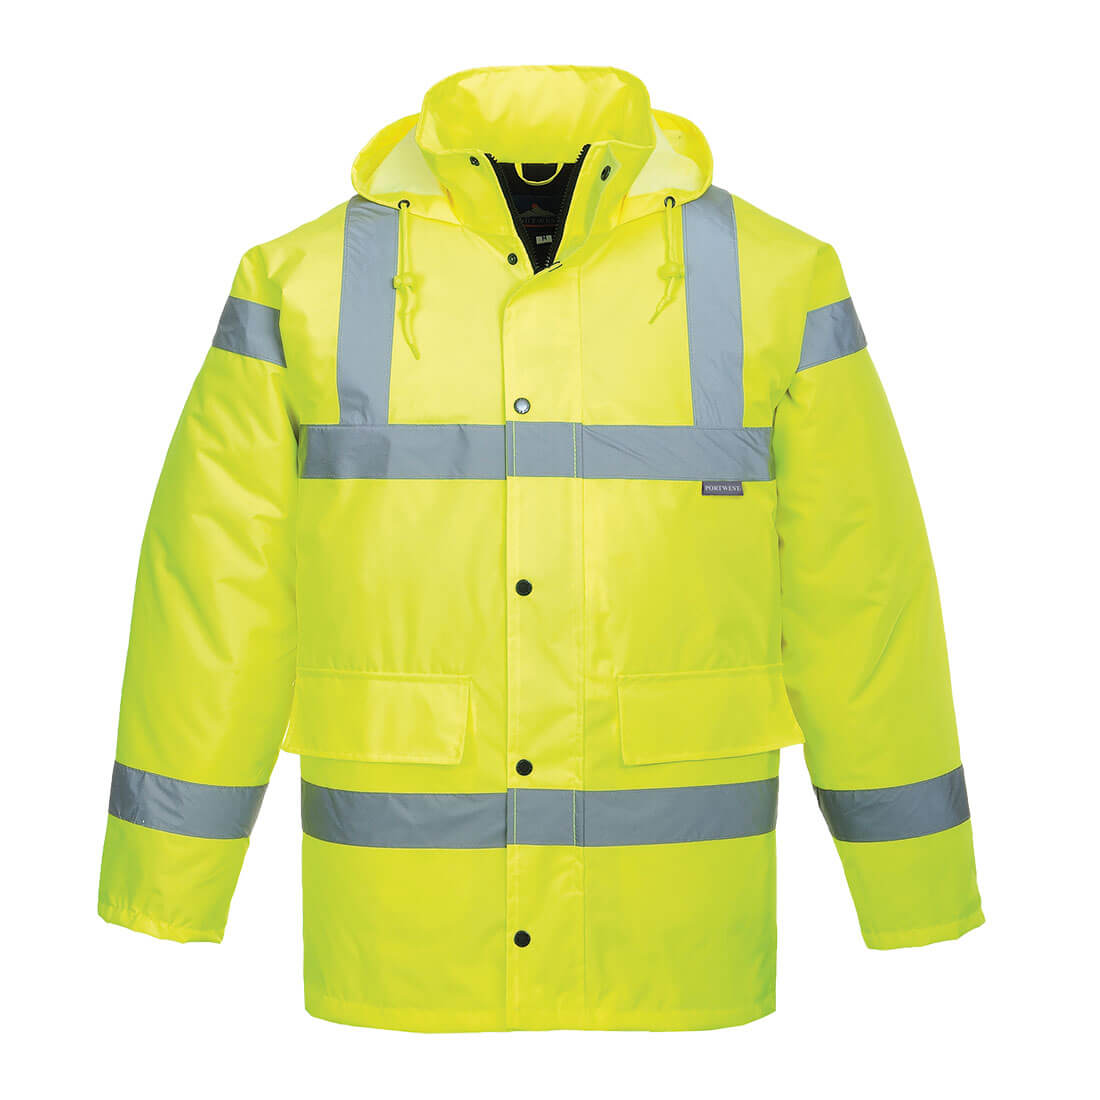 Oxford Weave 300D Class 3 Hi Vis Breathable Jacket Yellow 3XL